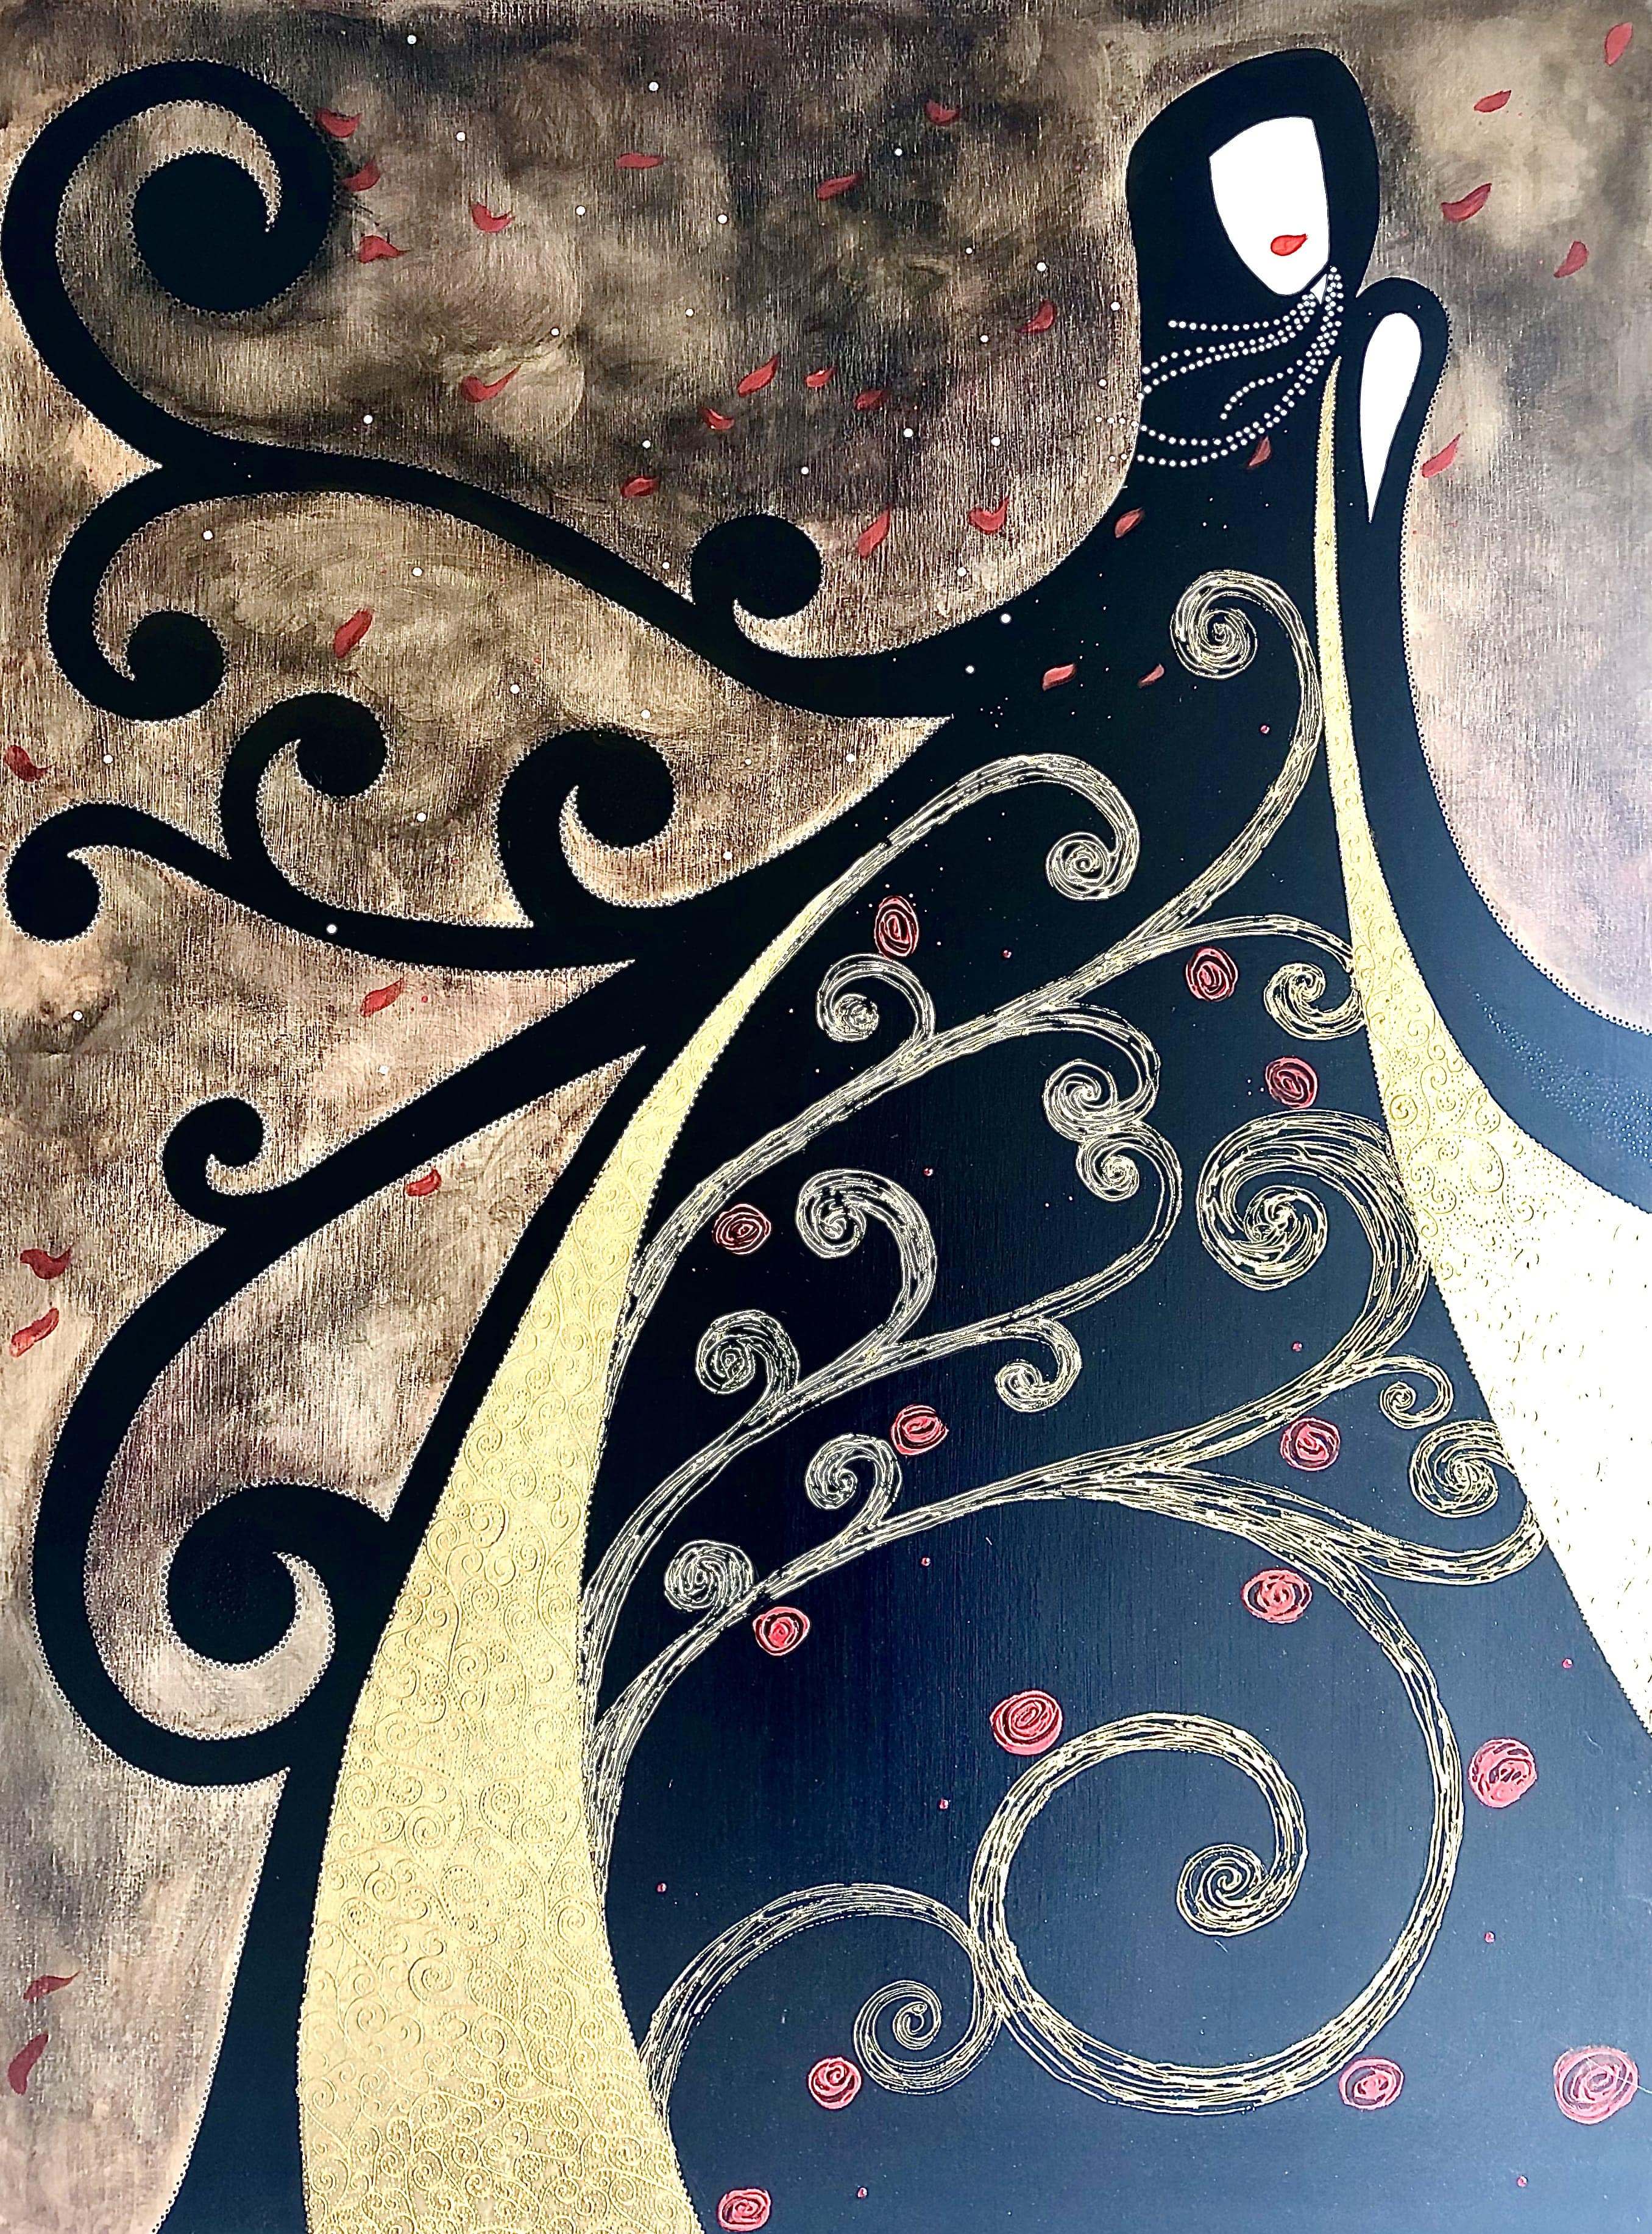 "Petite demoiselle au collier", 2017. 1 image